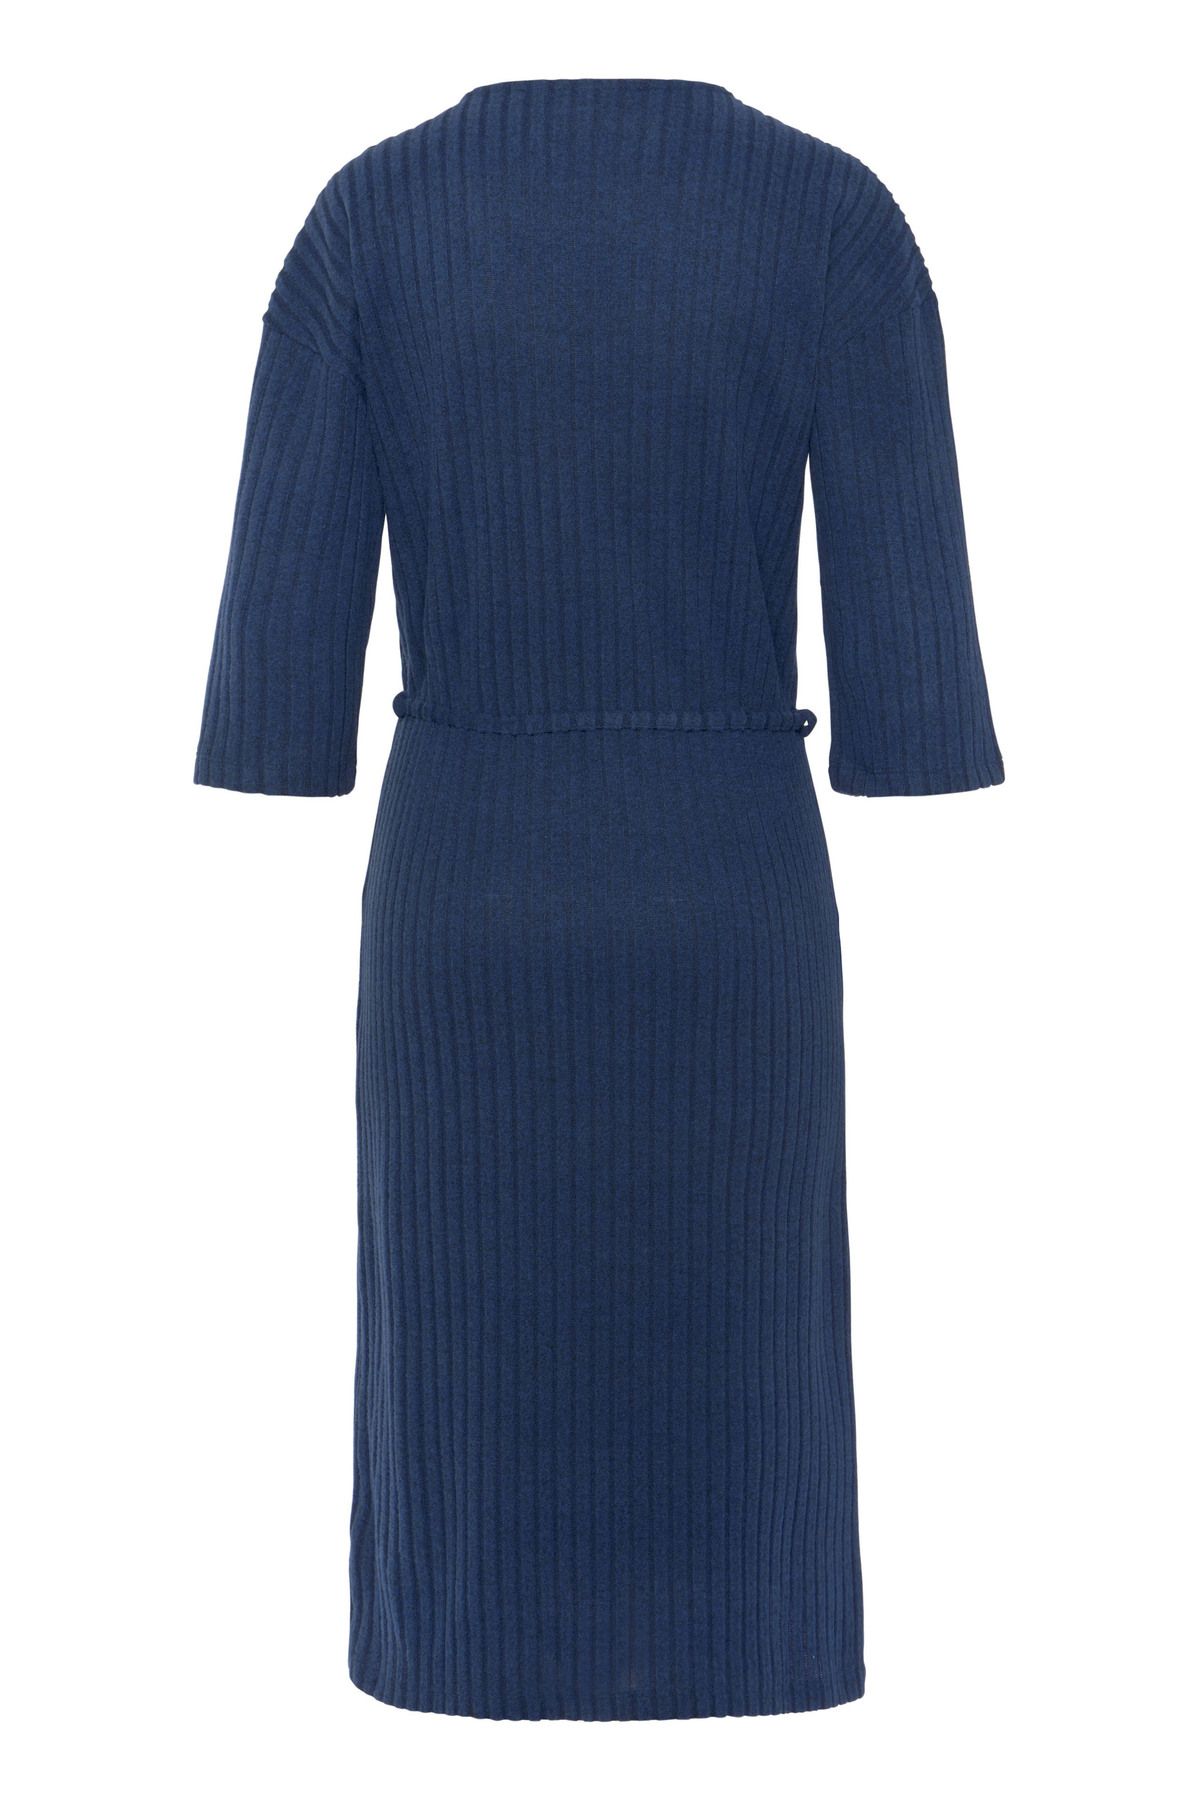 LASCANA - Blau - Basic - Kleid Trendyol